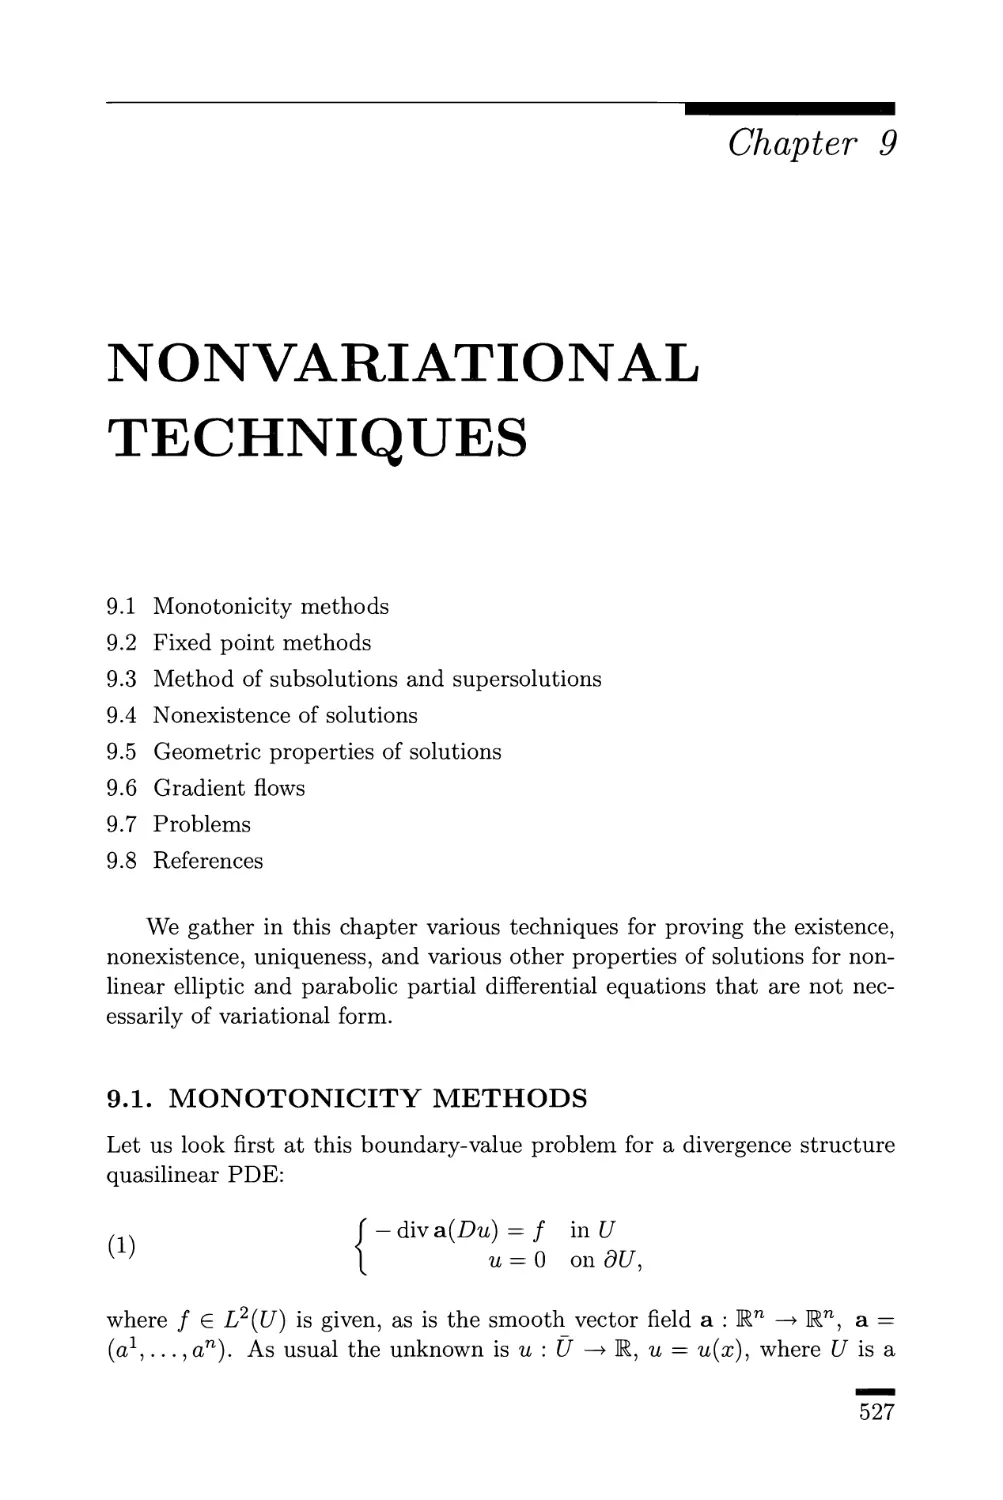 9. Nonvariational Techniques